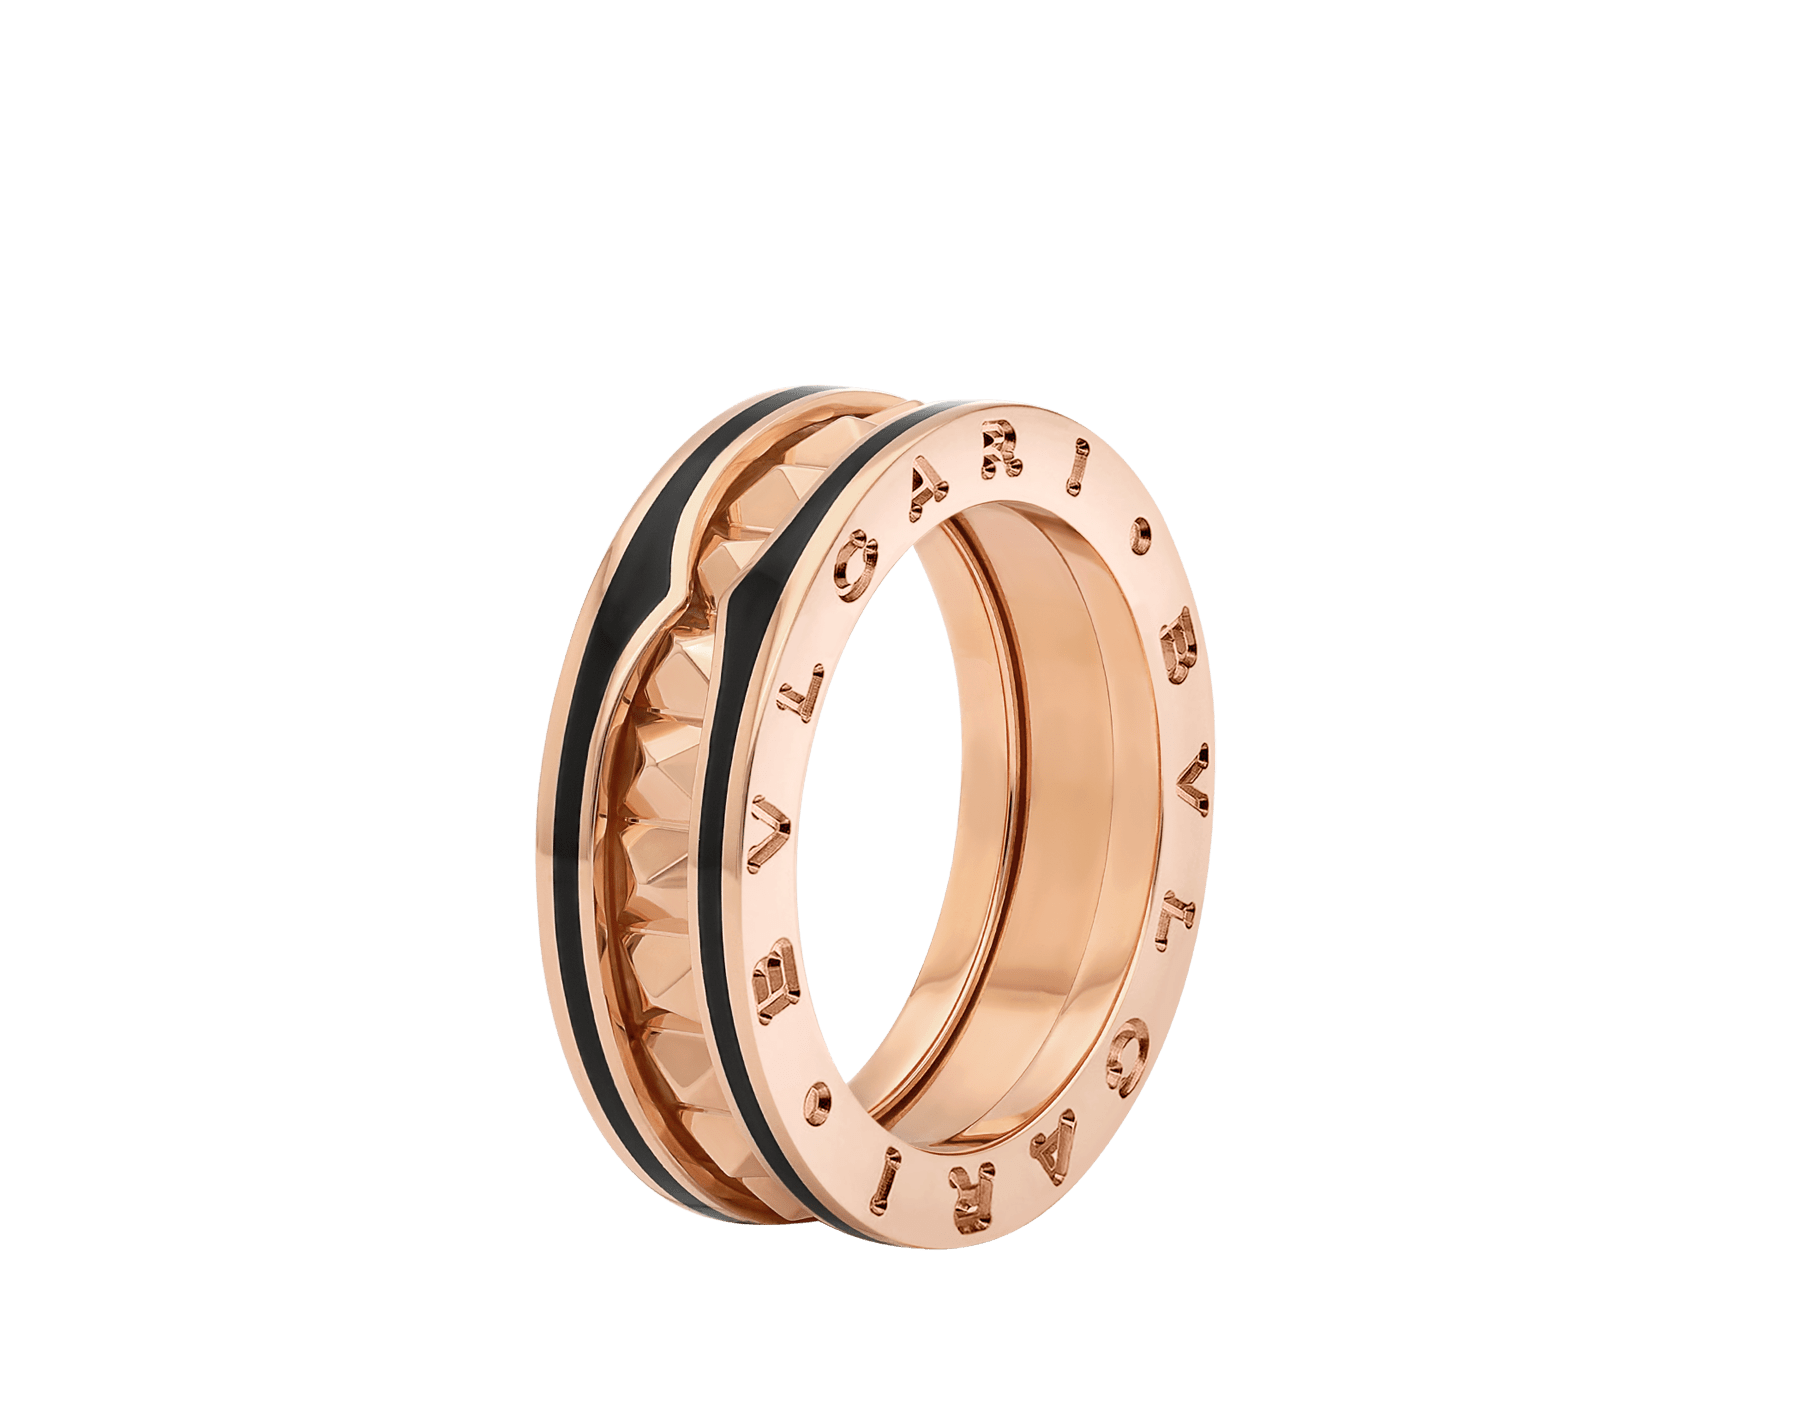 Кольцо B.zero1 Rock в один виток, розовое золото 18 карат, шипы на спирали, вставки из черной керамики на кромках AN859080 image 1